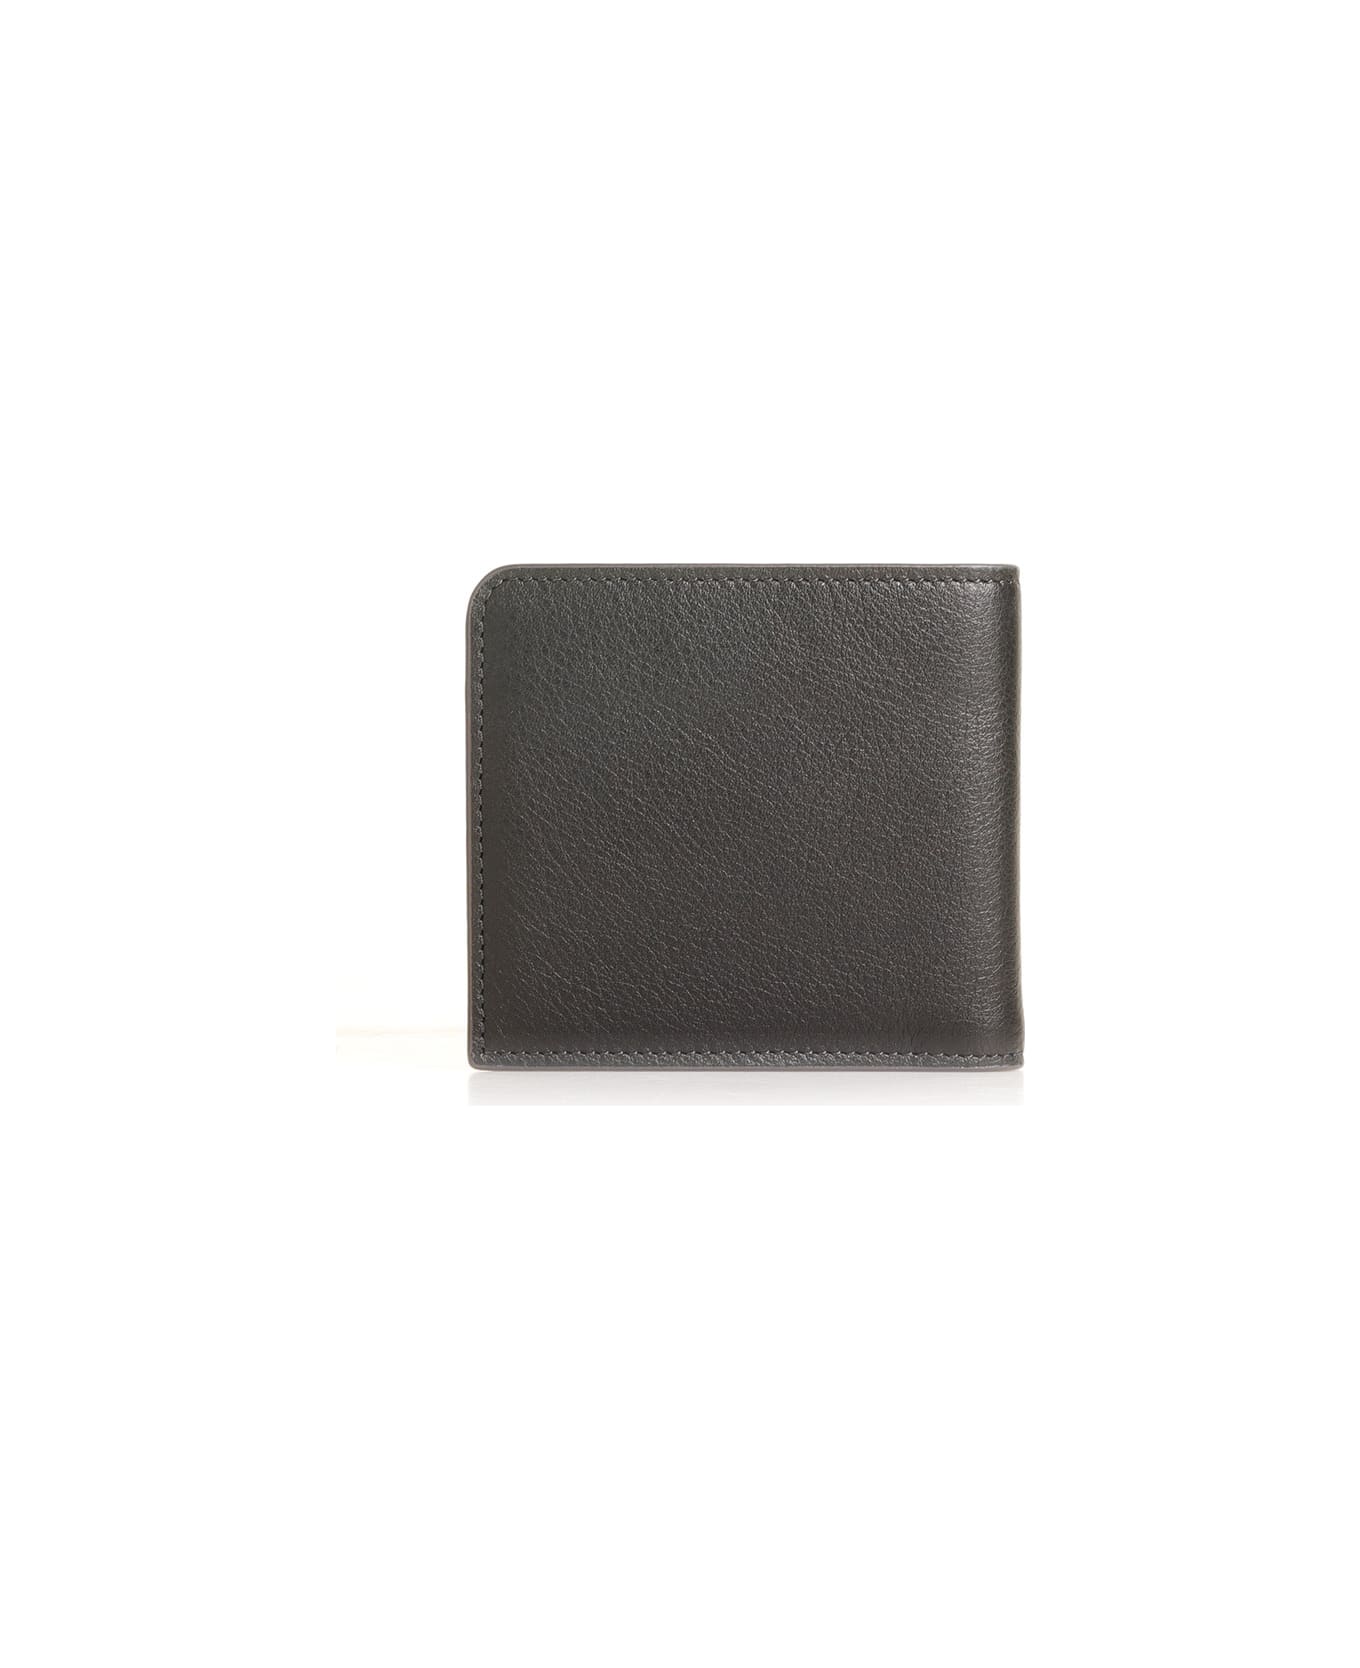 Hogan Leather Wallet With Logo - NERO